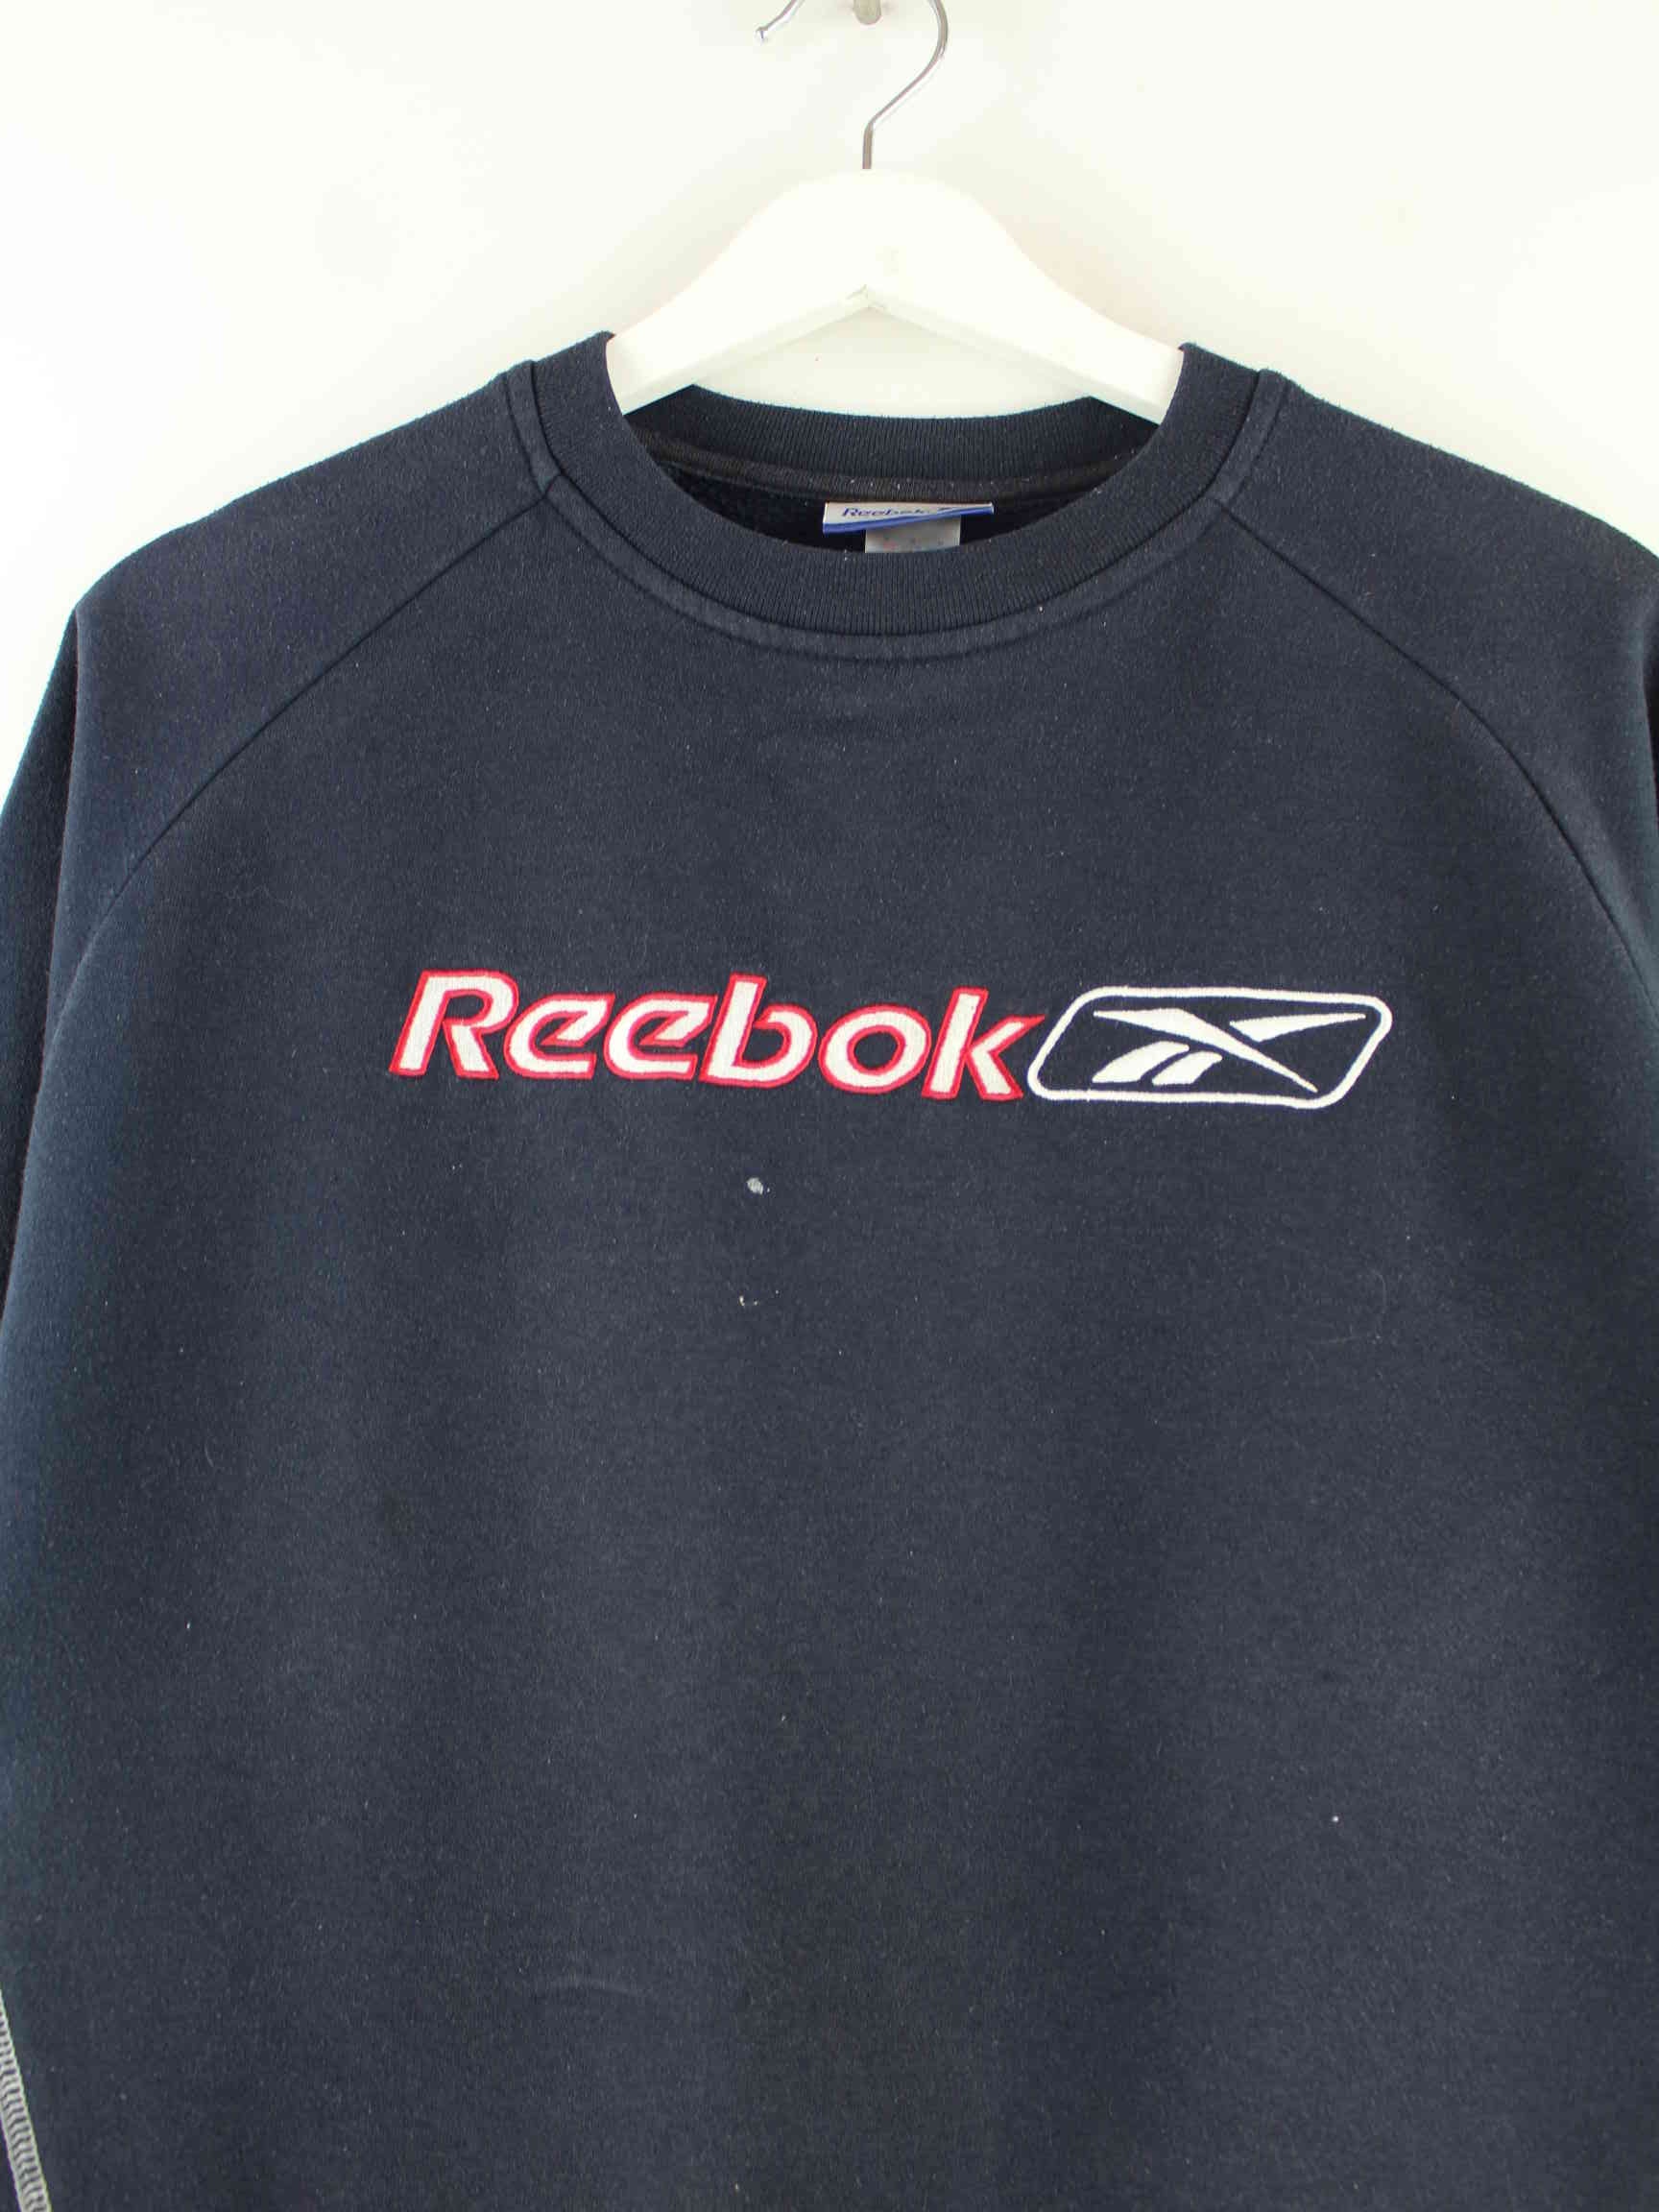 Reebok y2k Embroidered Logo Sweater Blau S (detail image 1)